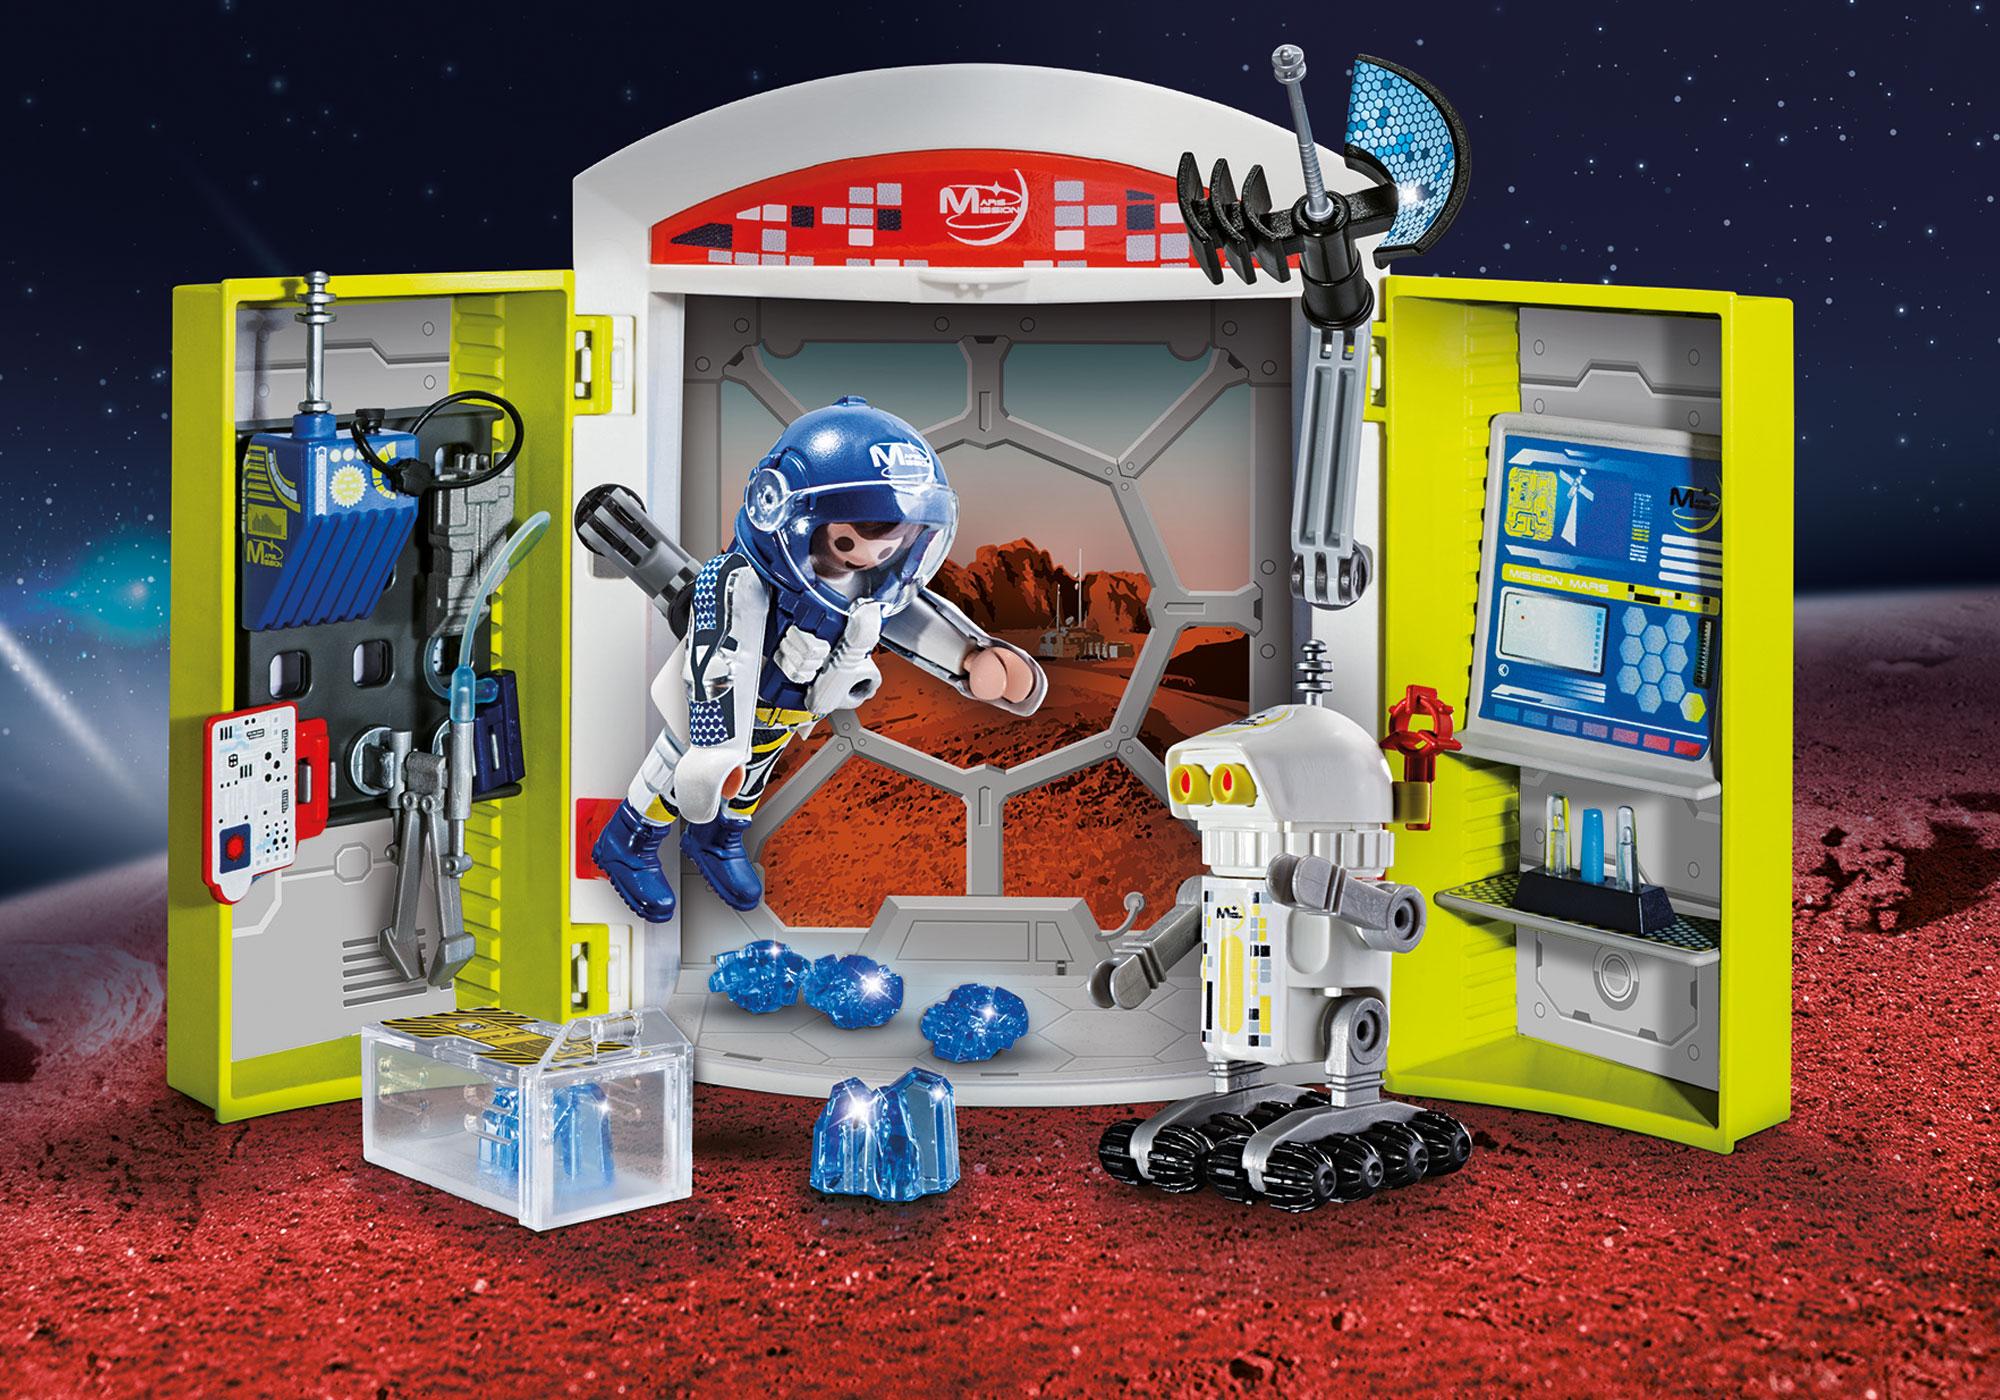 playmobil space toys